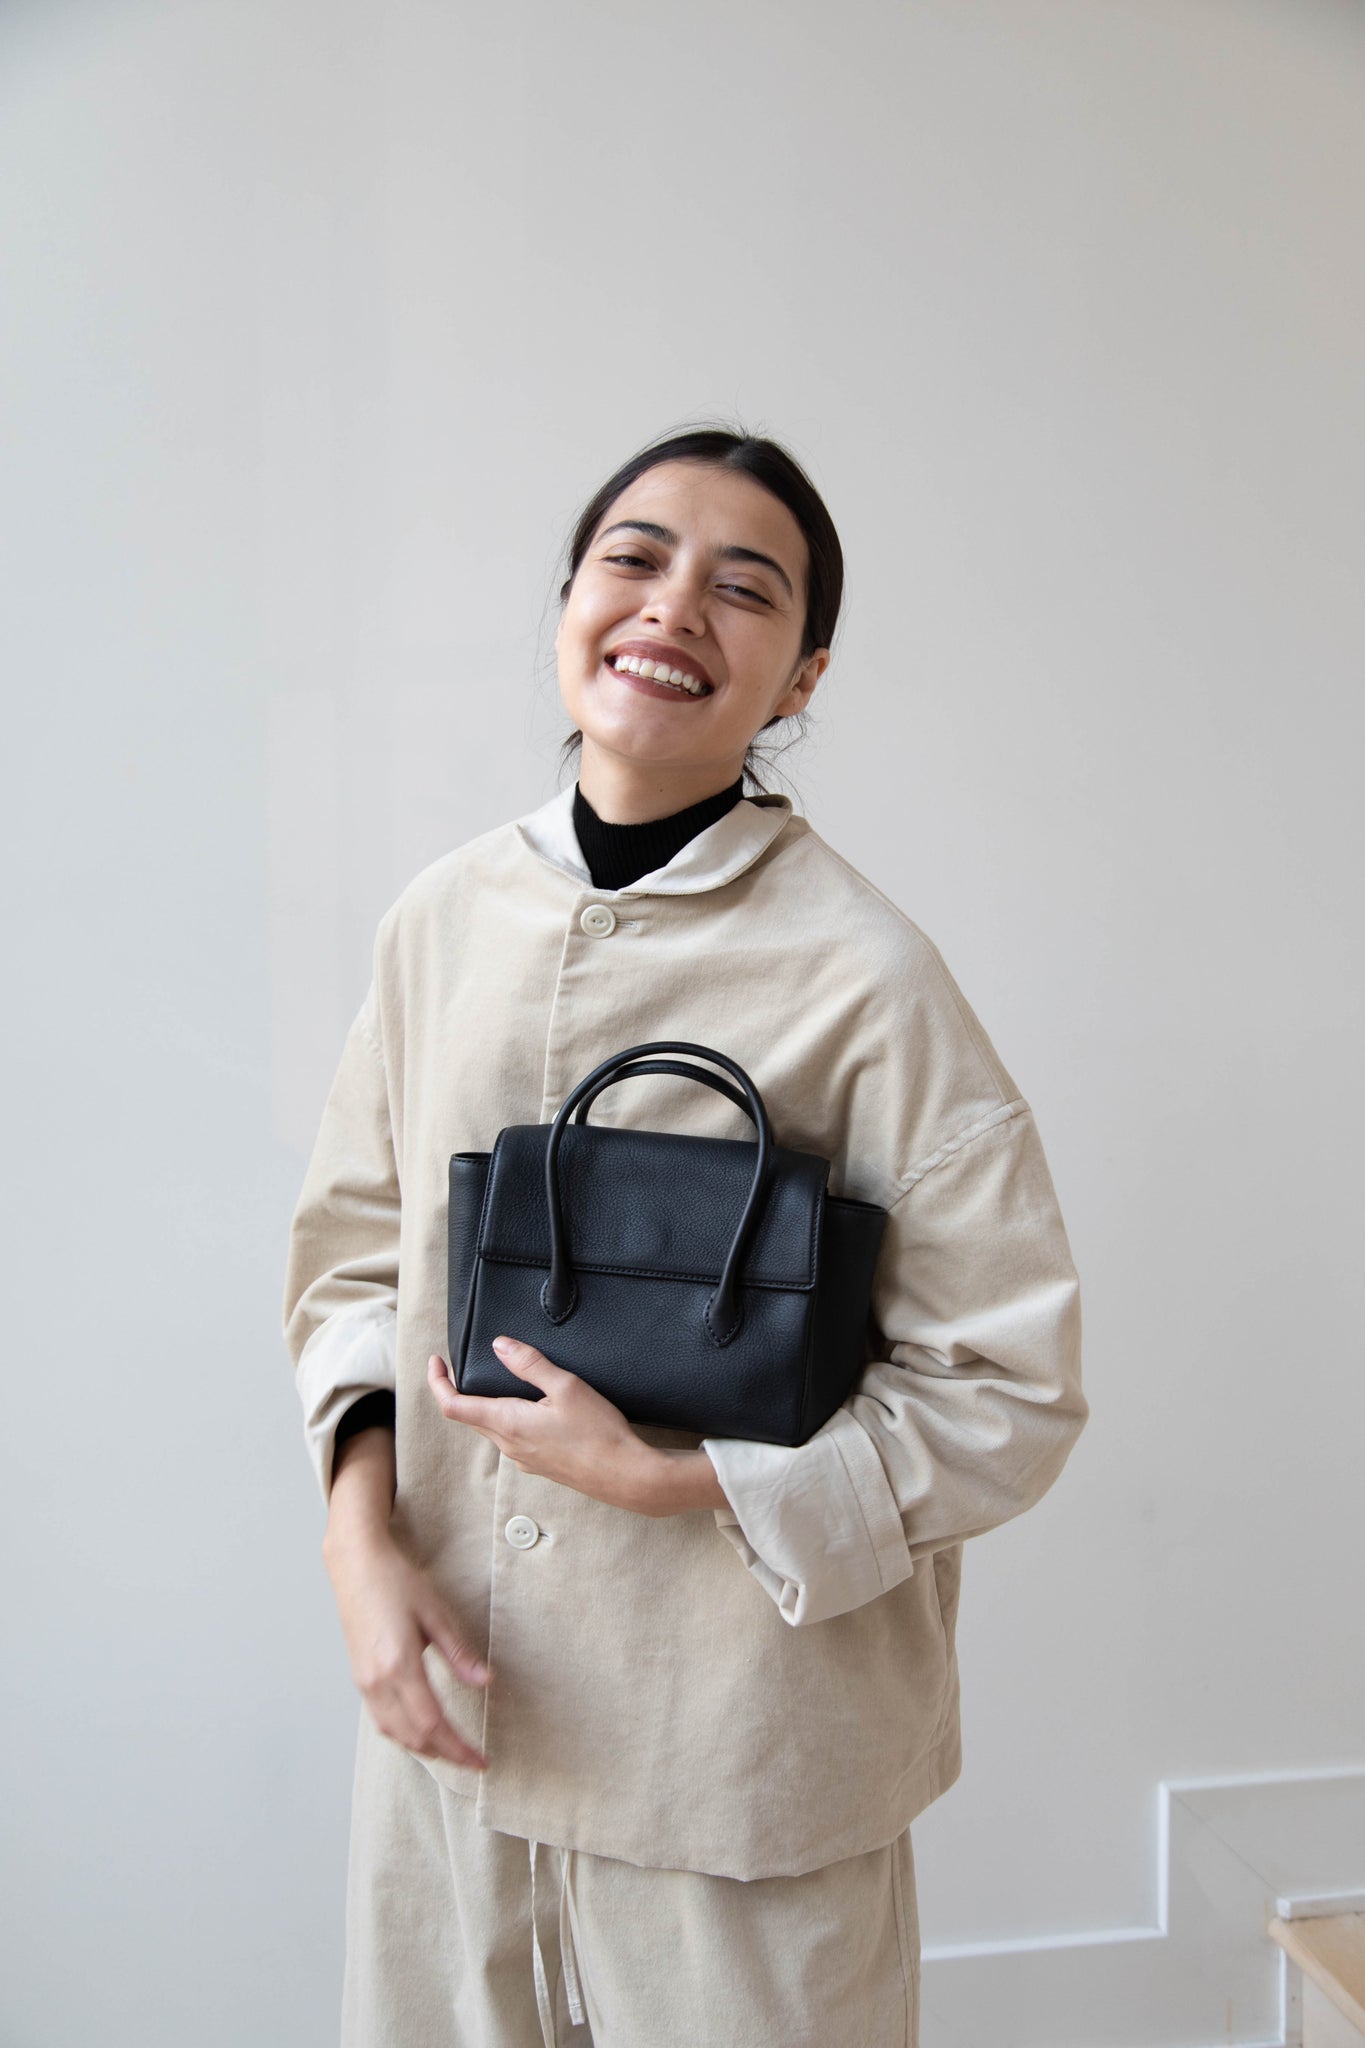 Arts & Science Stitch Flap Mini Bag in Black Leather